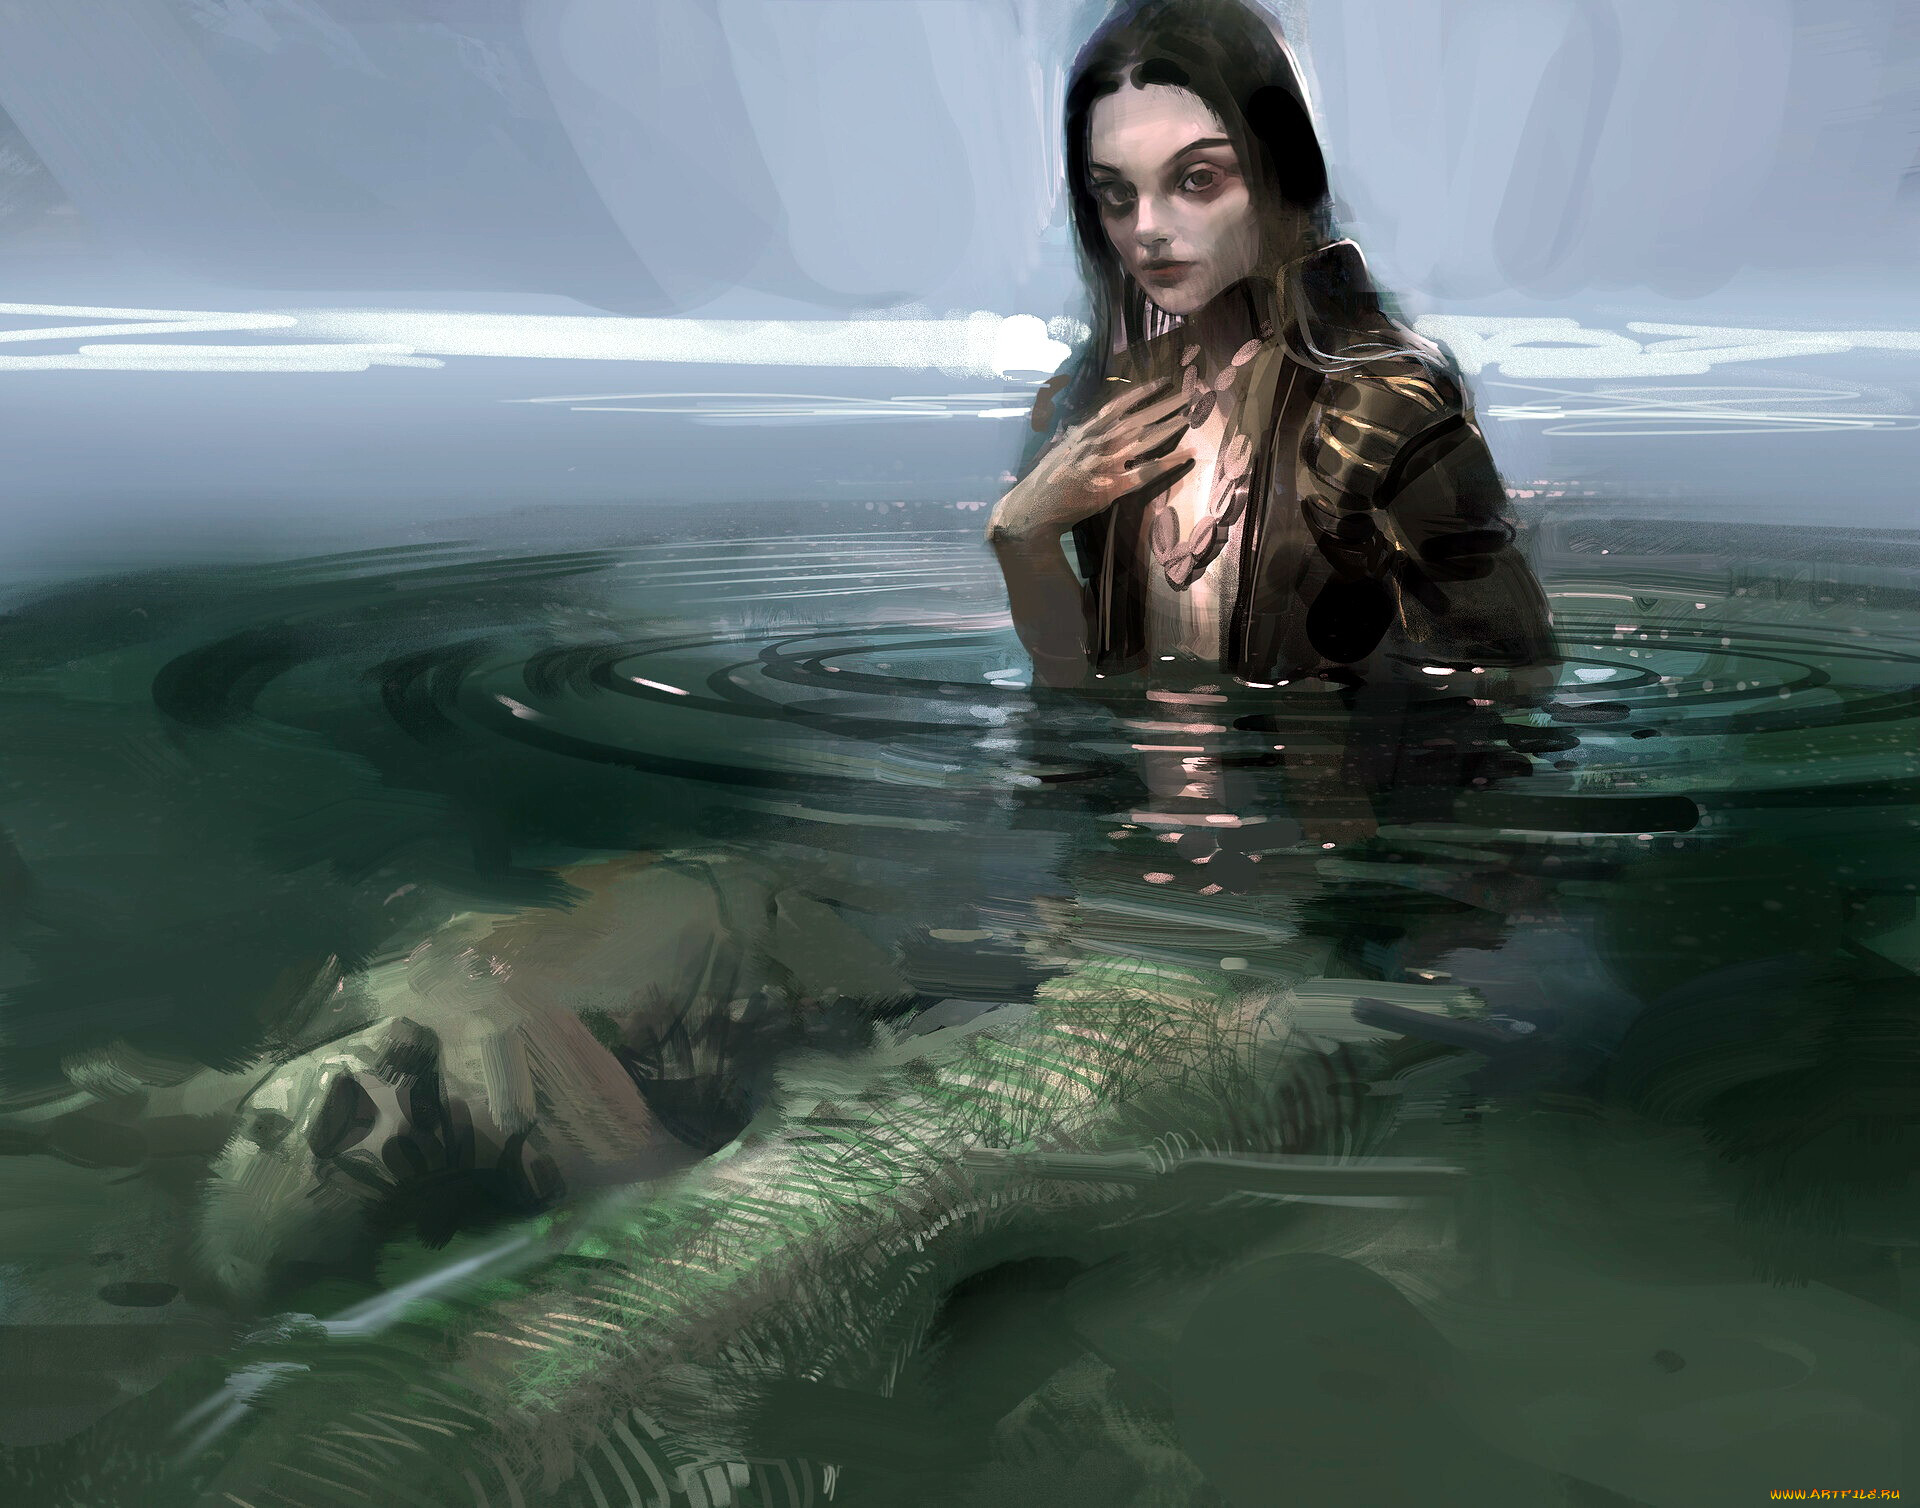 Fantasy Art Fantasy Girl Mermaids Creature In Water Corpse Looking At Viewer Dark Hair Water Ripples 1920x1508